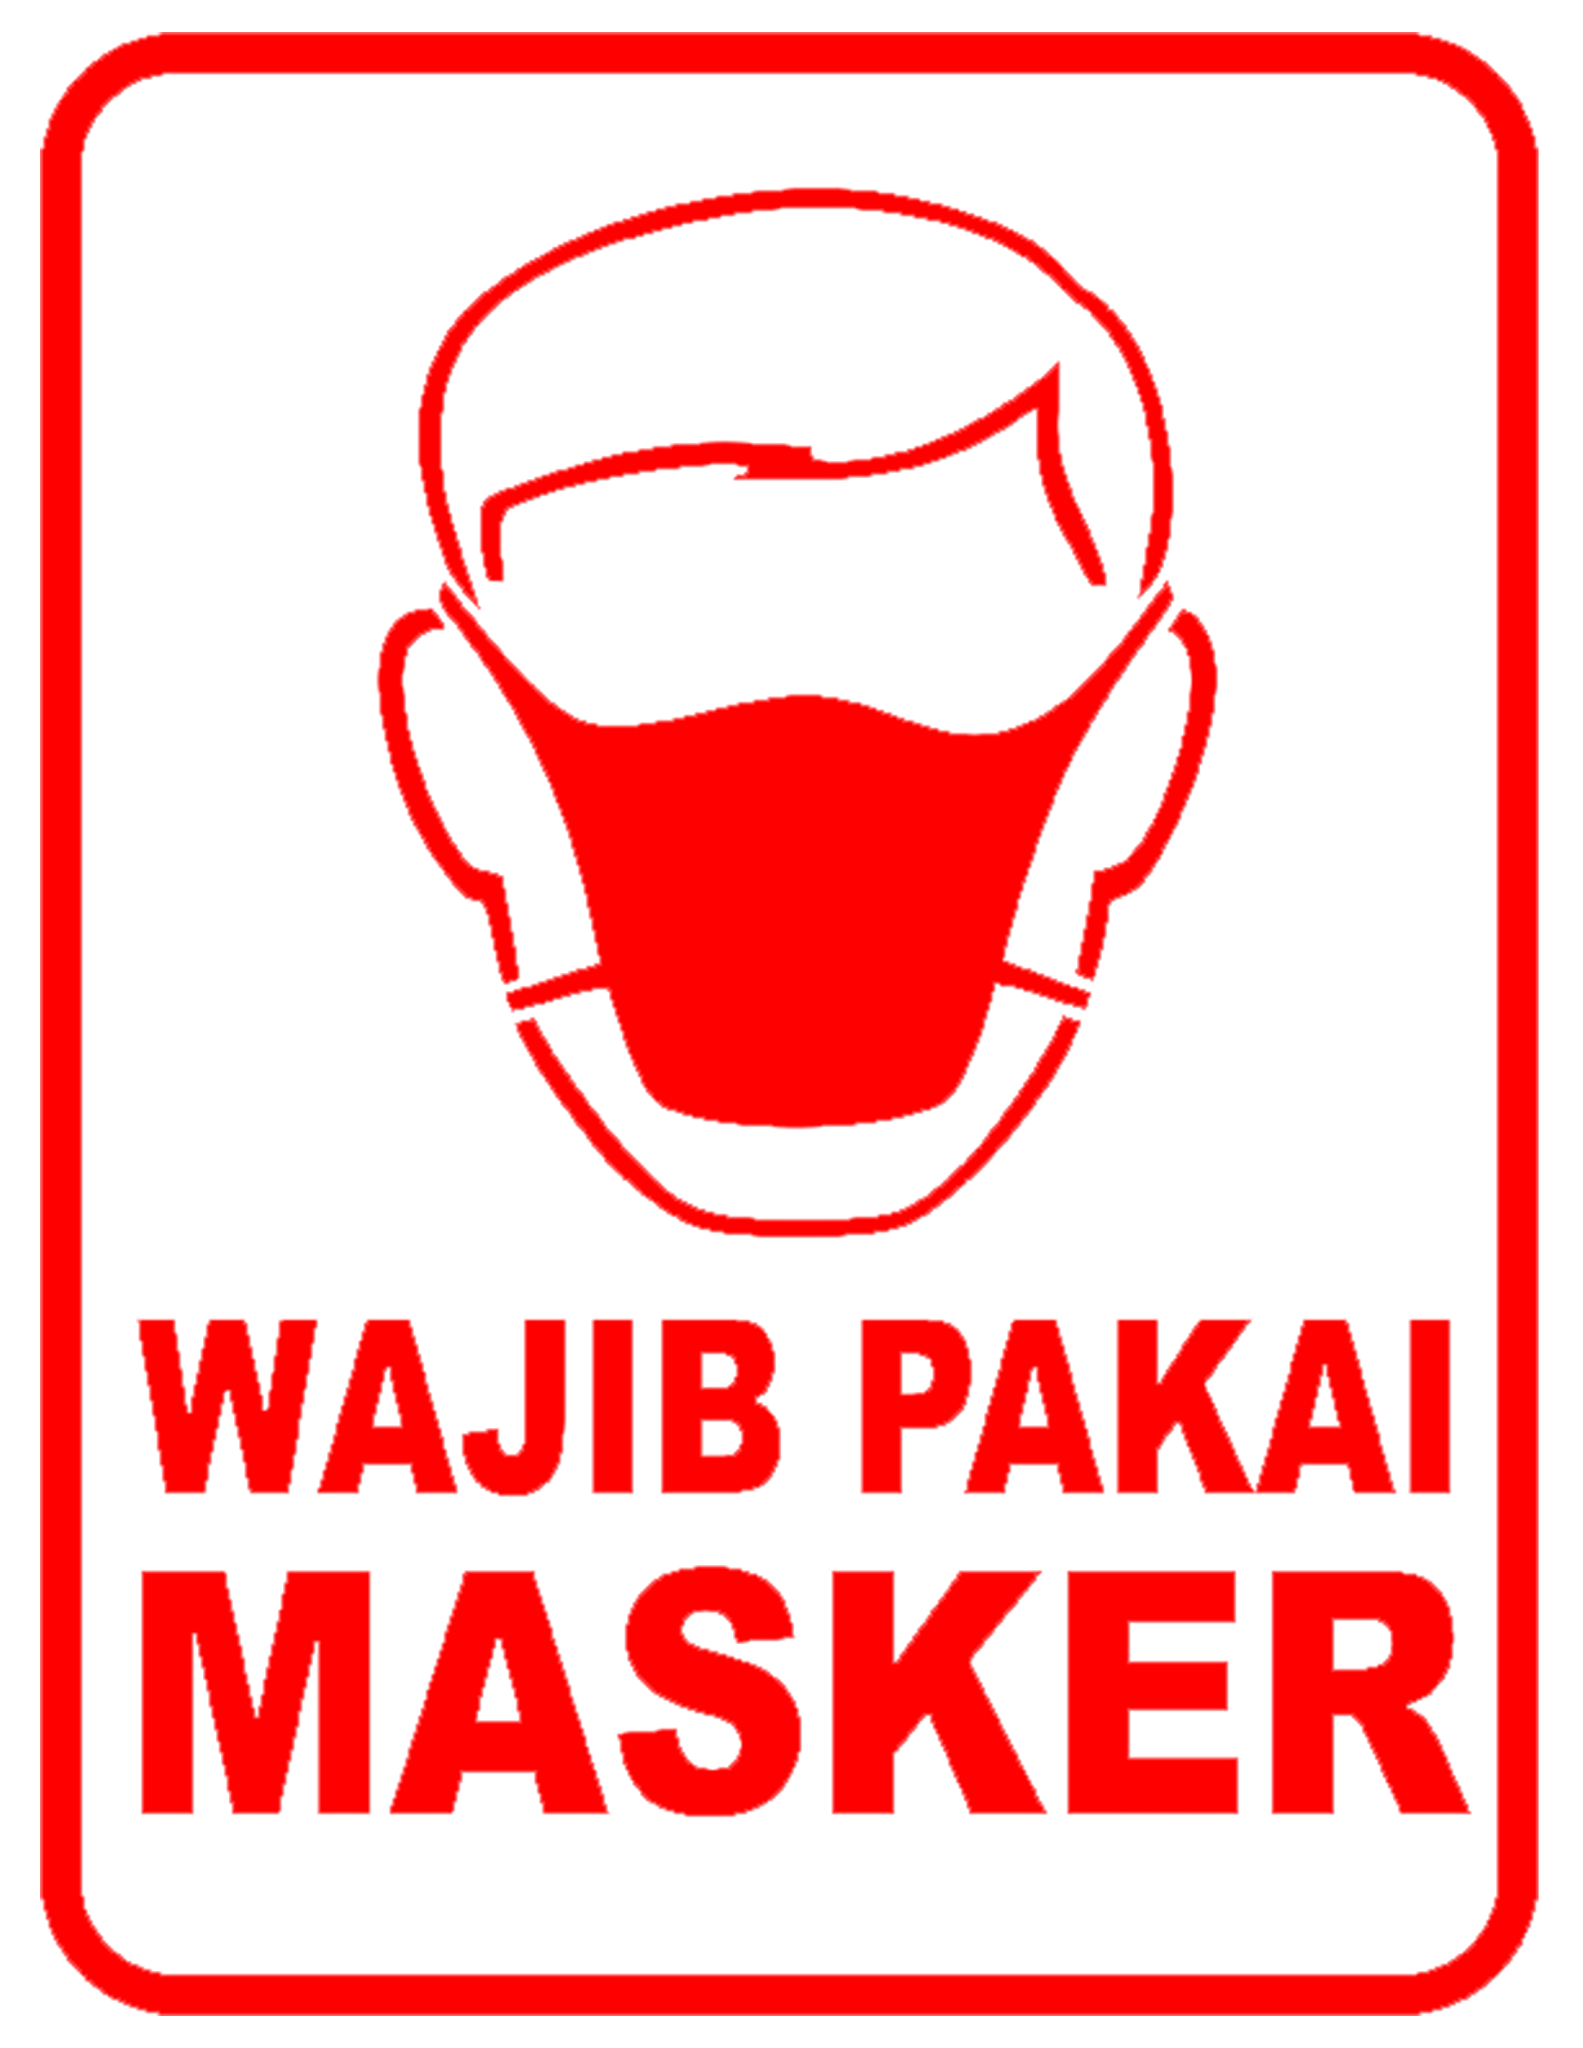 area-wajib-masker-logo-wajib-pakai-masker-png-area-wajib-masker-poster